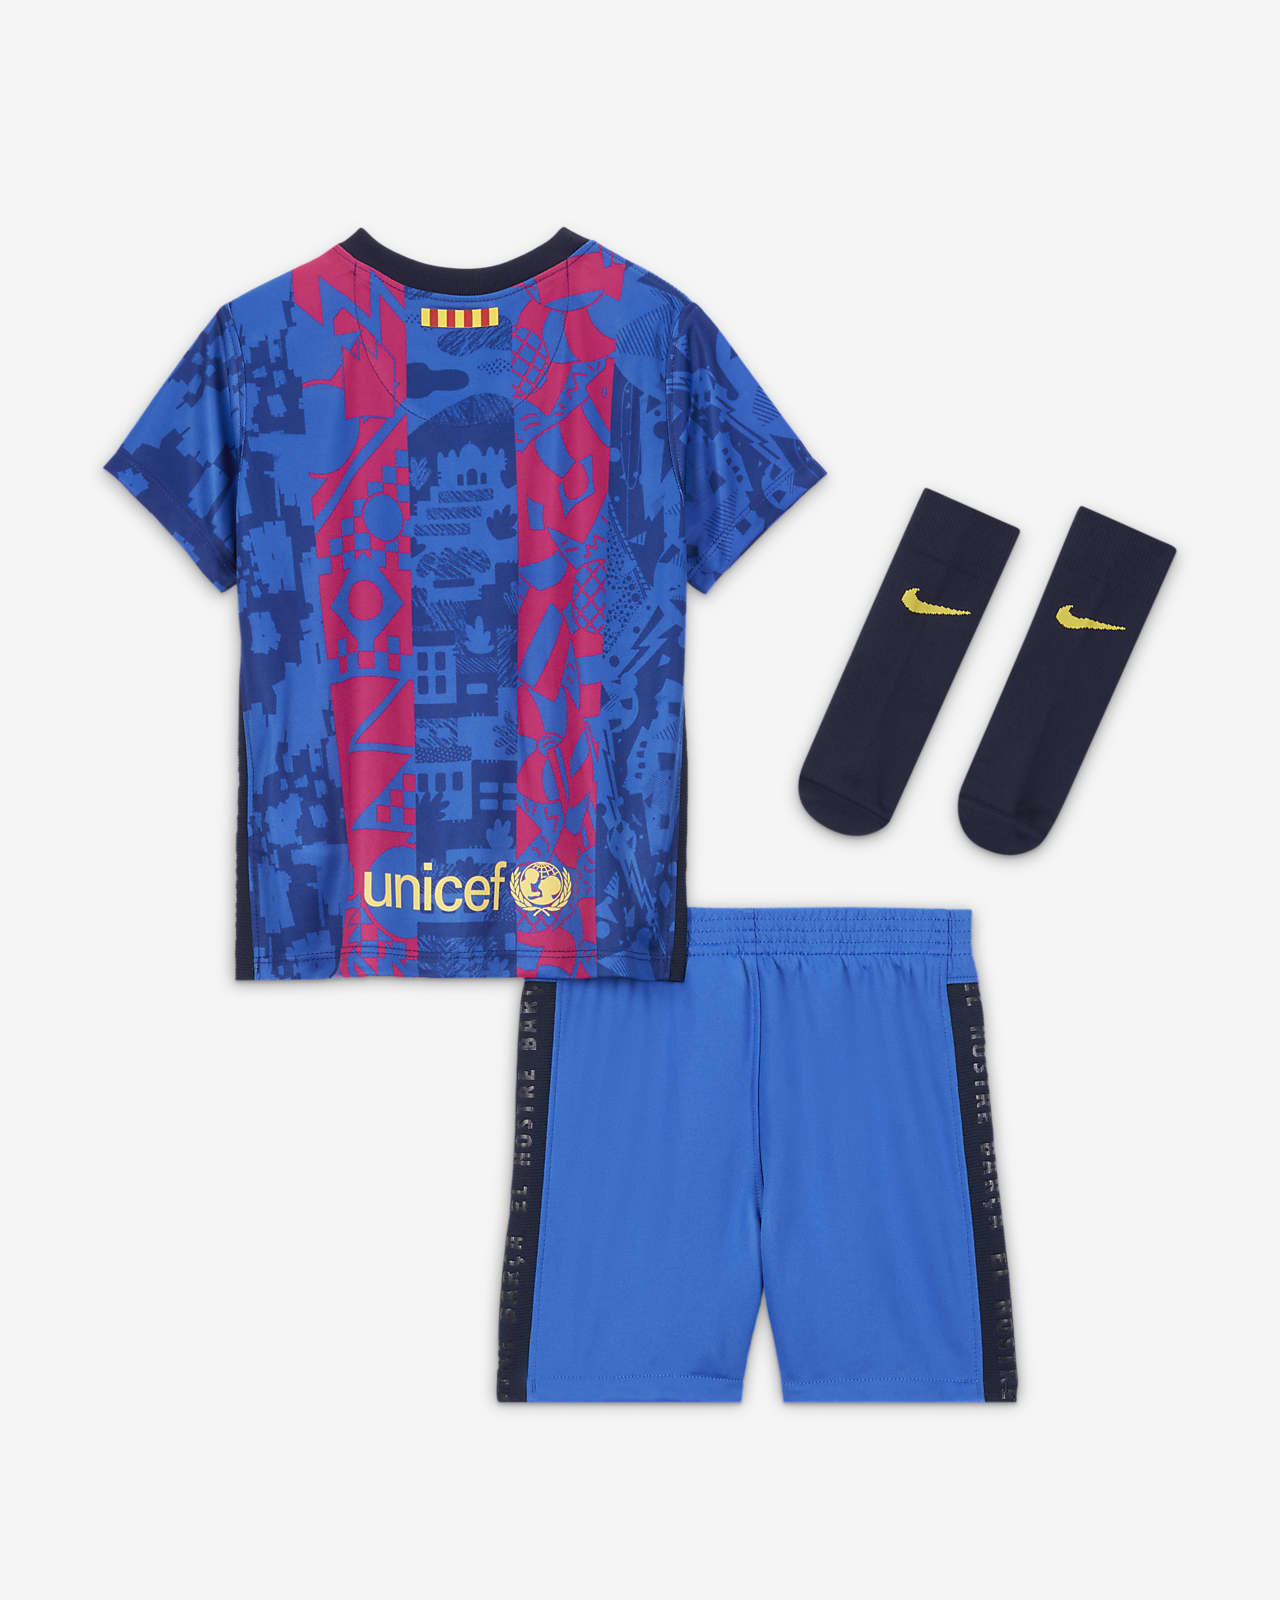 factor crisis Amplificar Kit del FC Barcelona alternativo 2021/22 para bebé e infantil. Nike.com